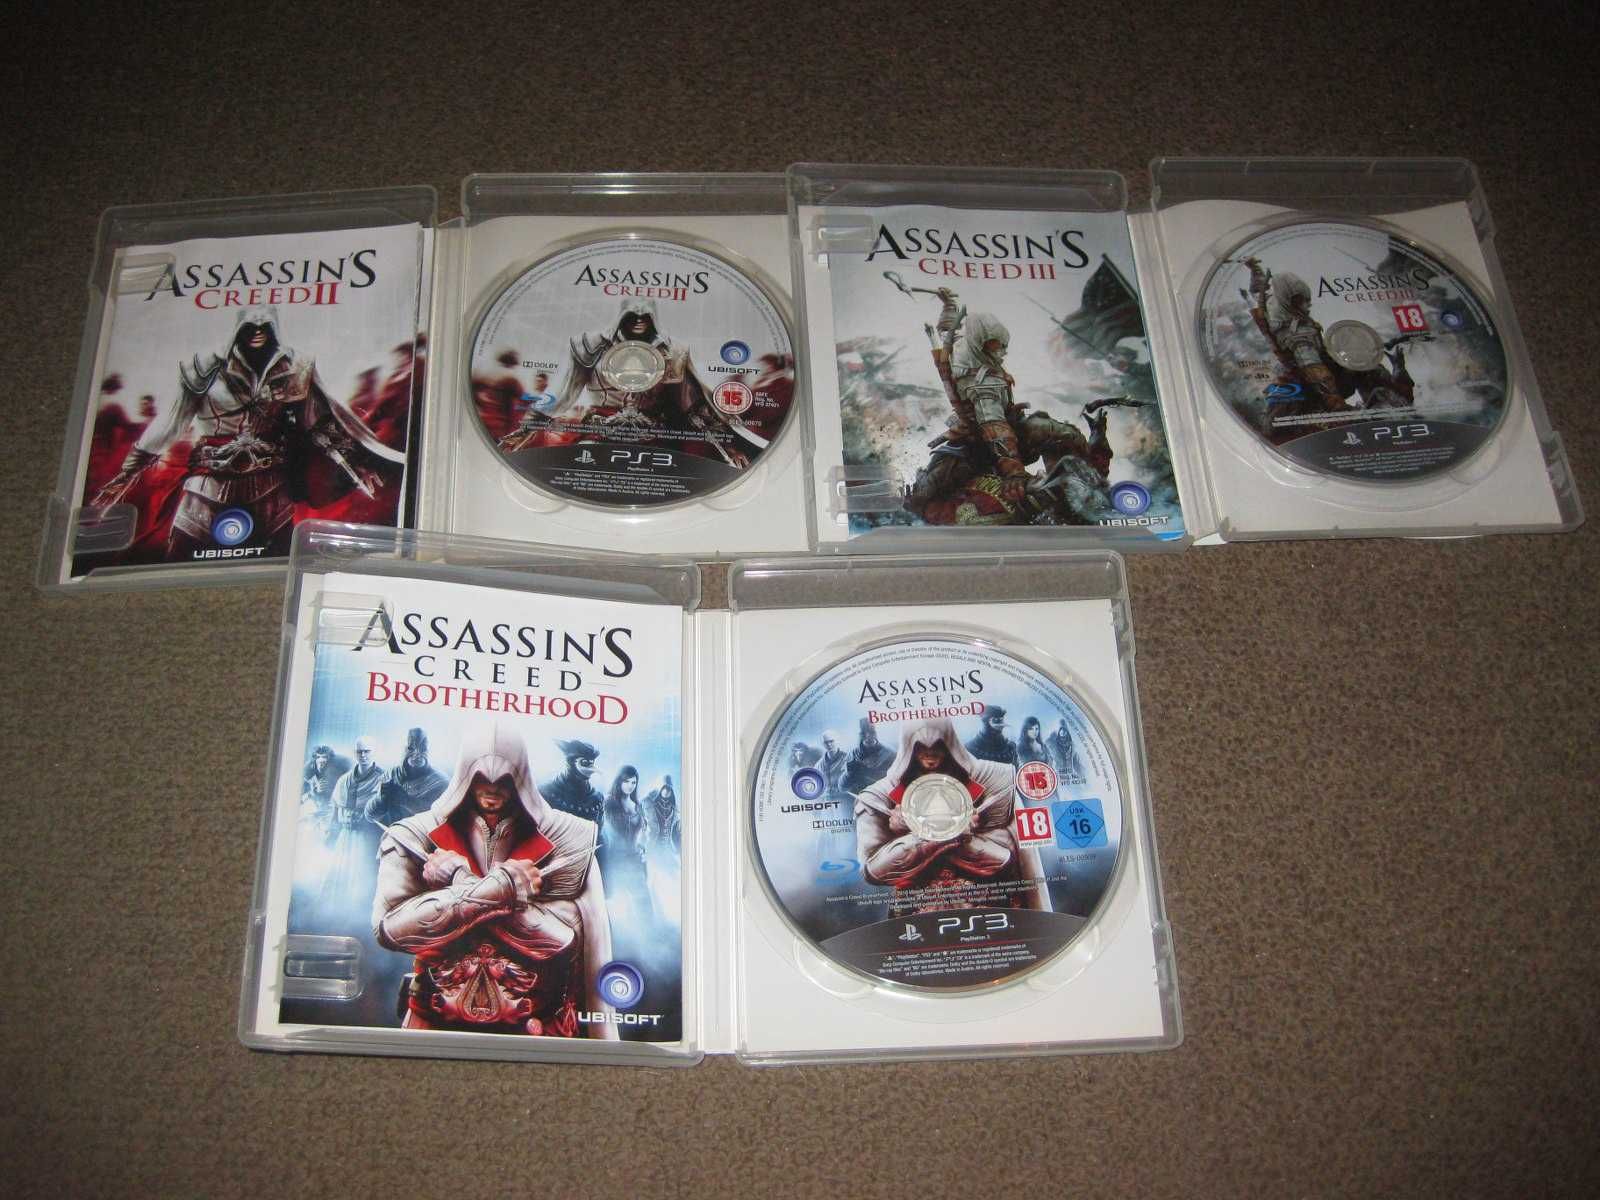 3 Jogos da Saga "Assassin`s Creed" para PS3/Completos!